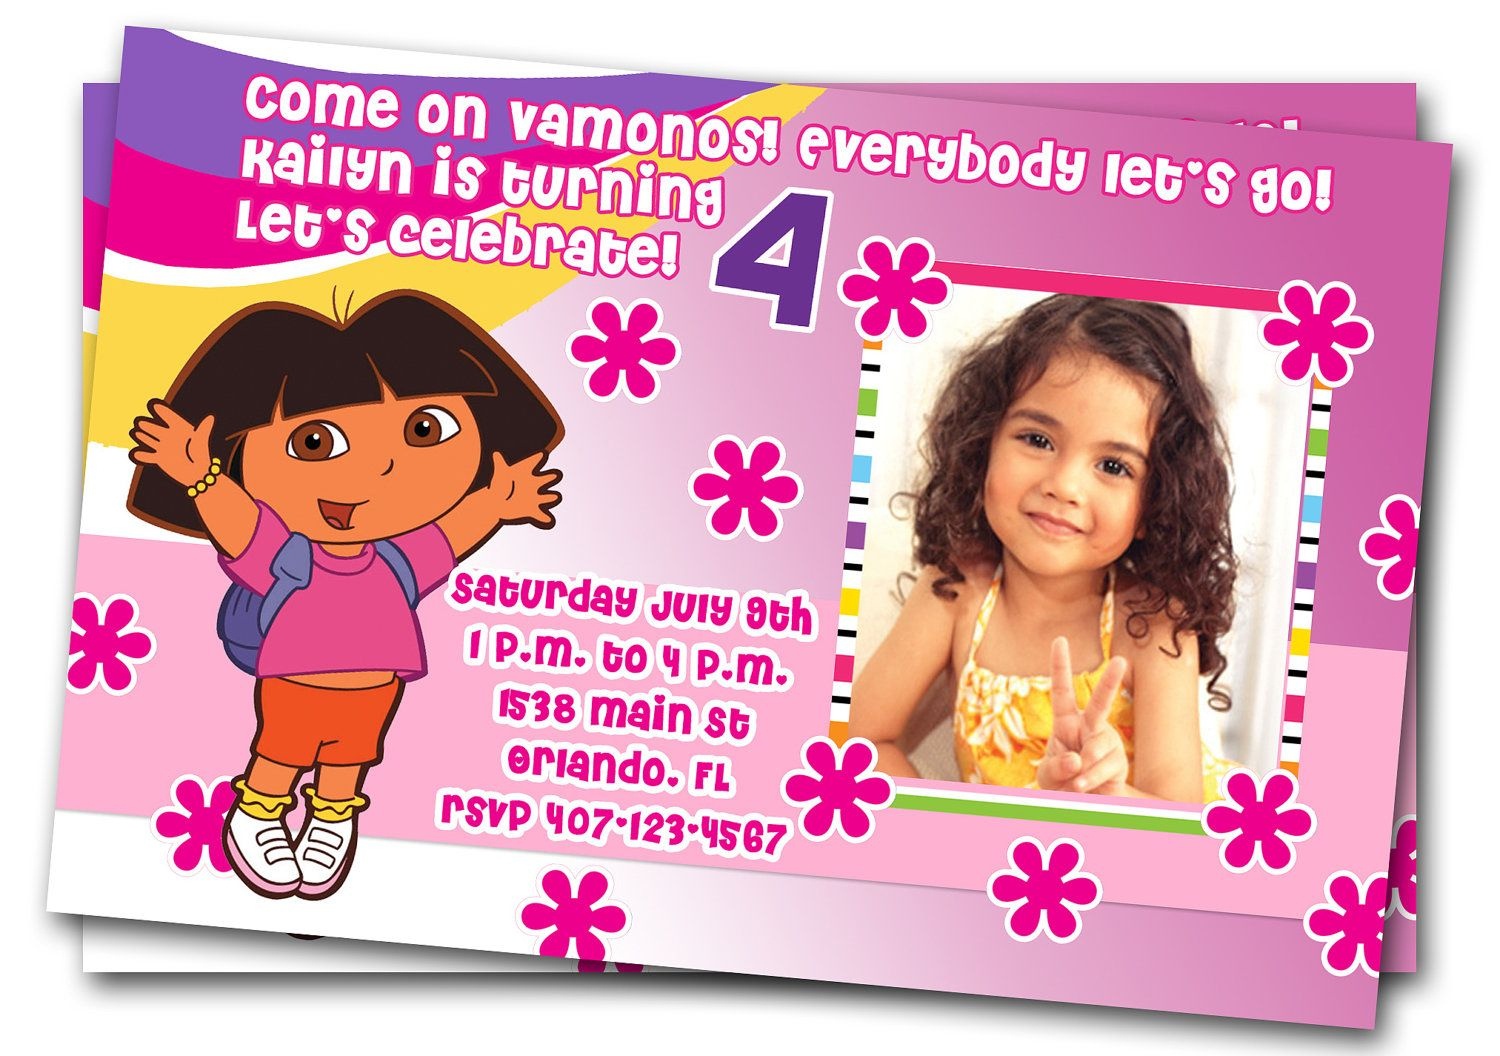 Free Dora Birthday Card Invitations Â€“ Birthday Card Ideas | Diy - Dora Birthday Cards Free Printable